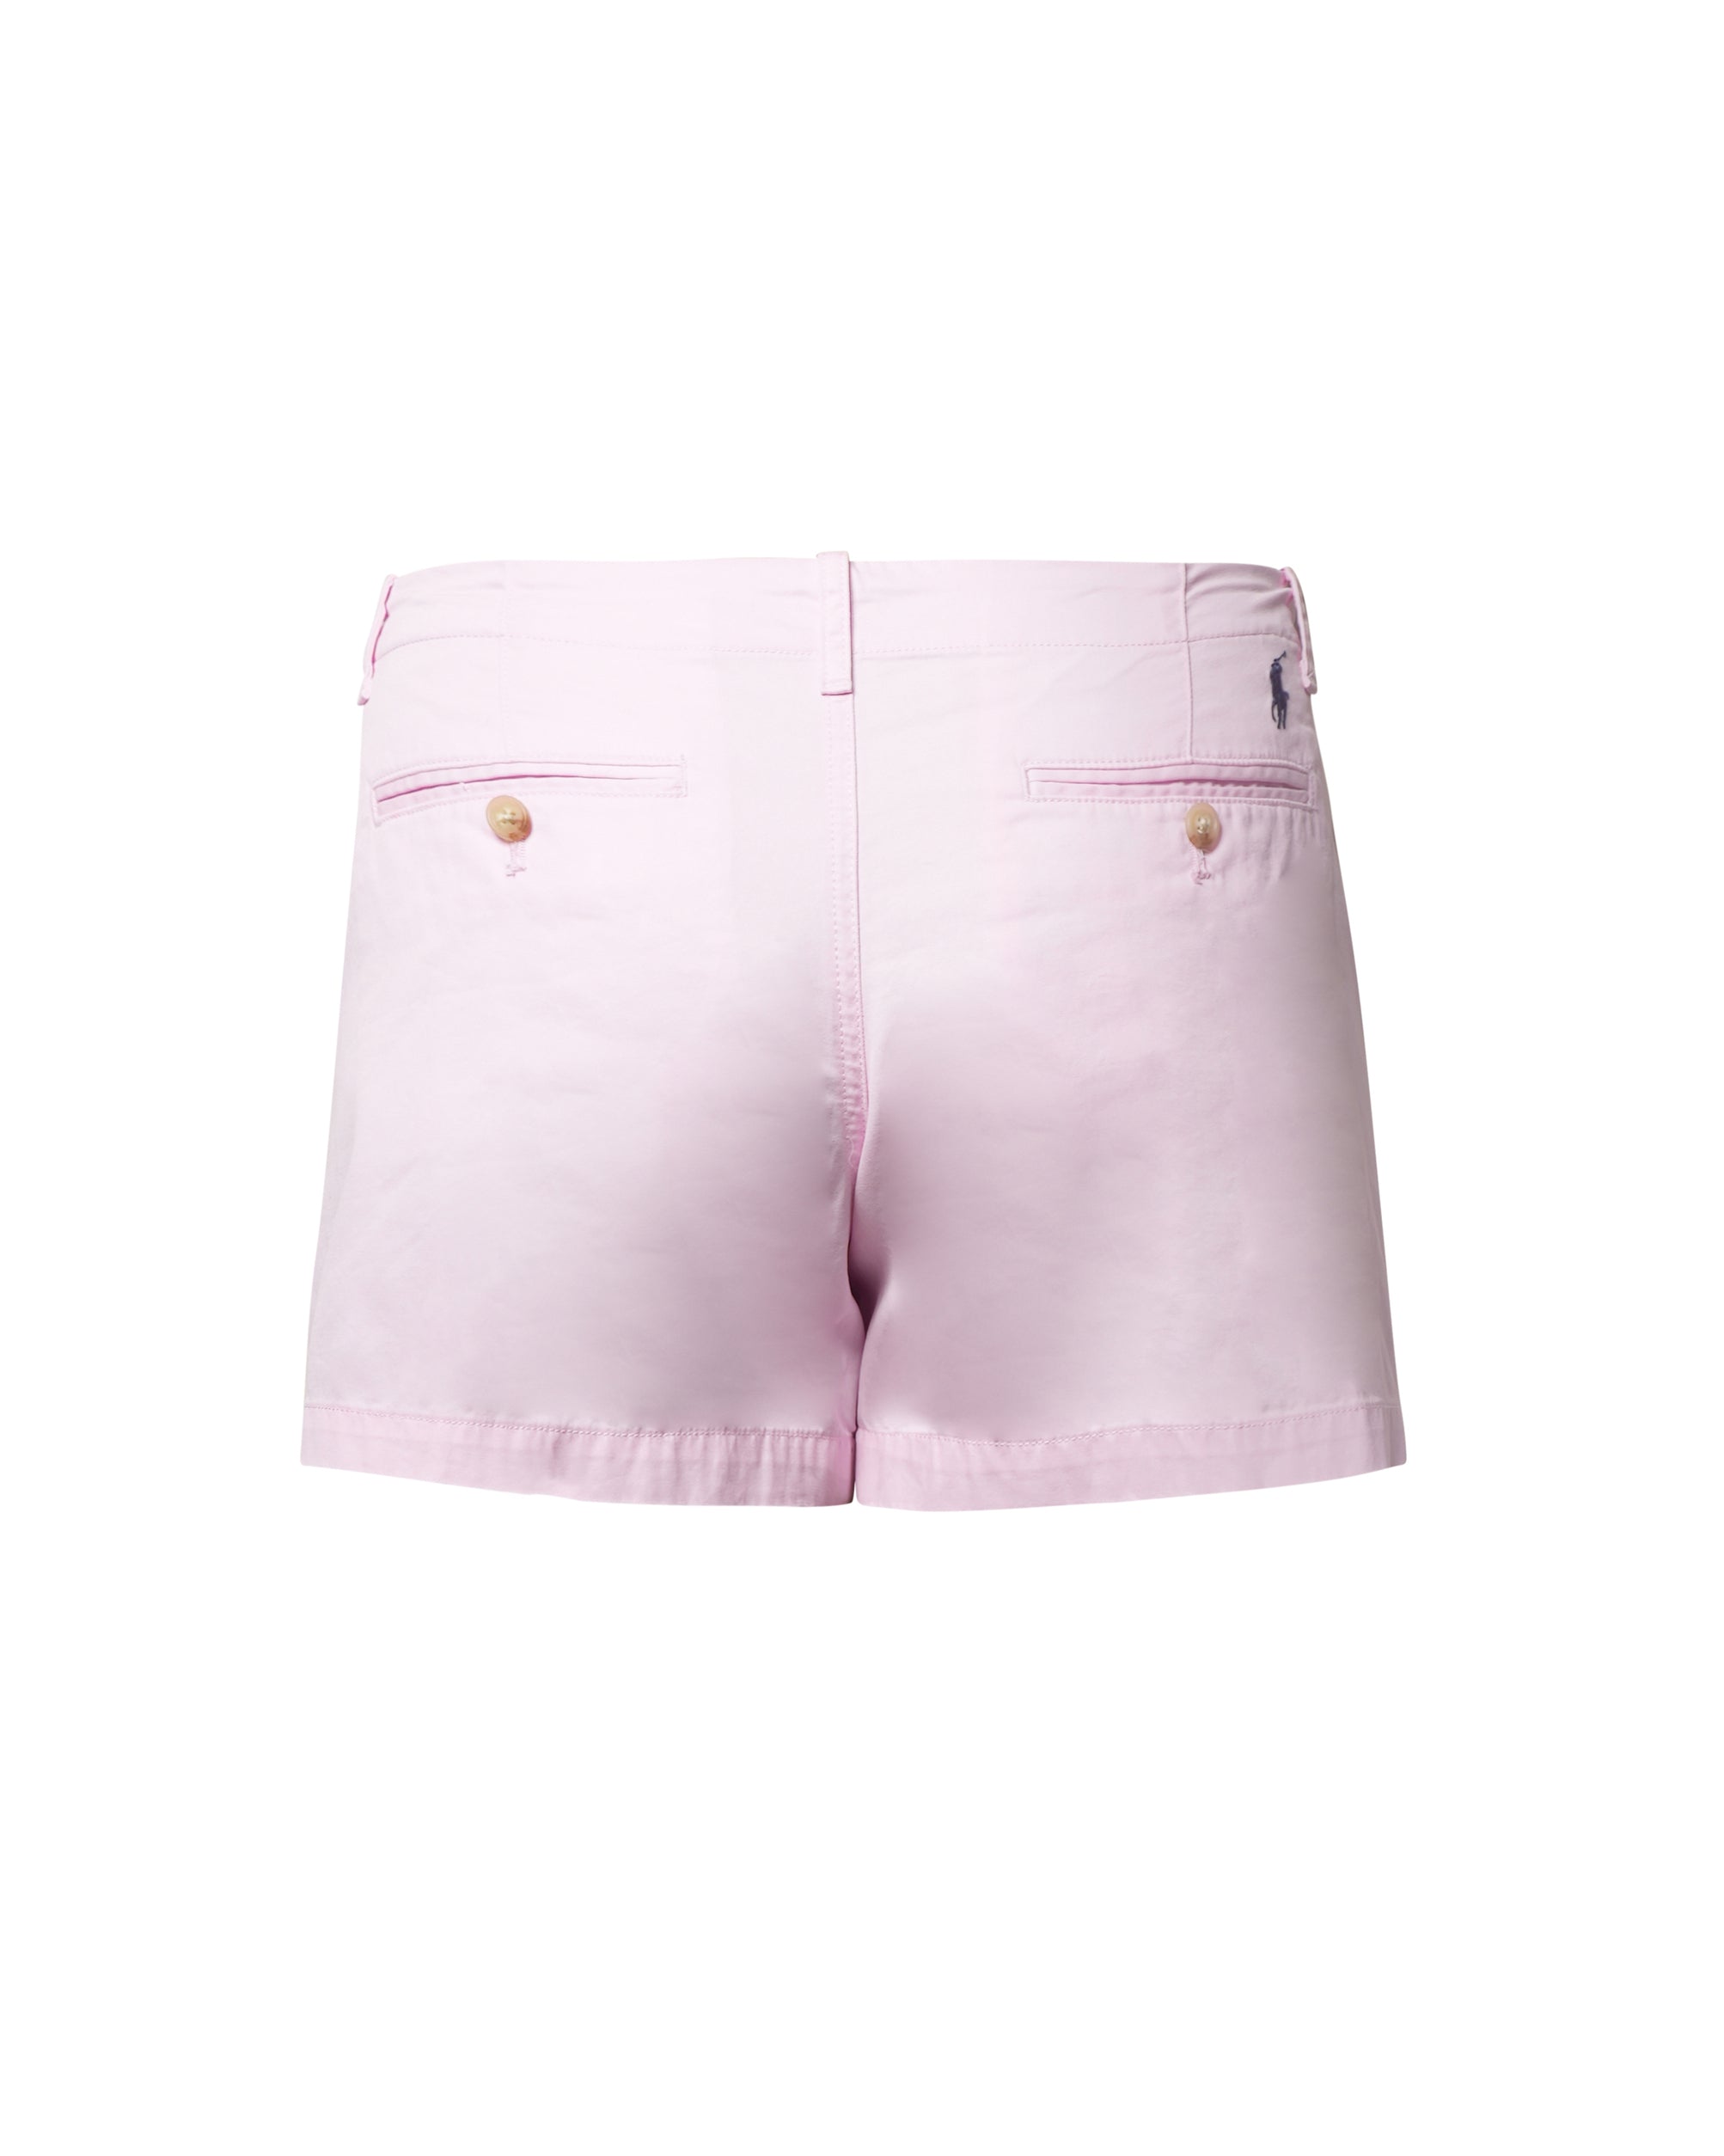 Polo Ralph Lauren Flat Front Chino Shorts